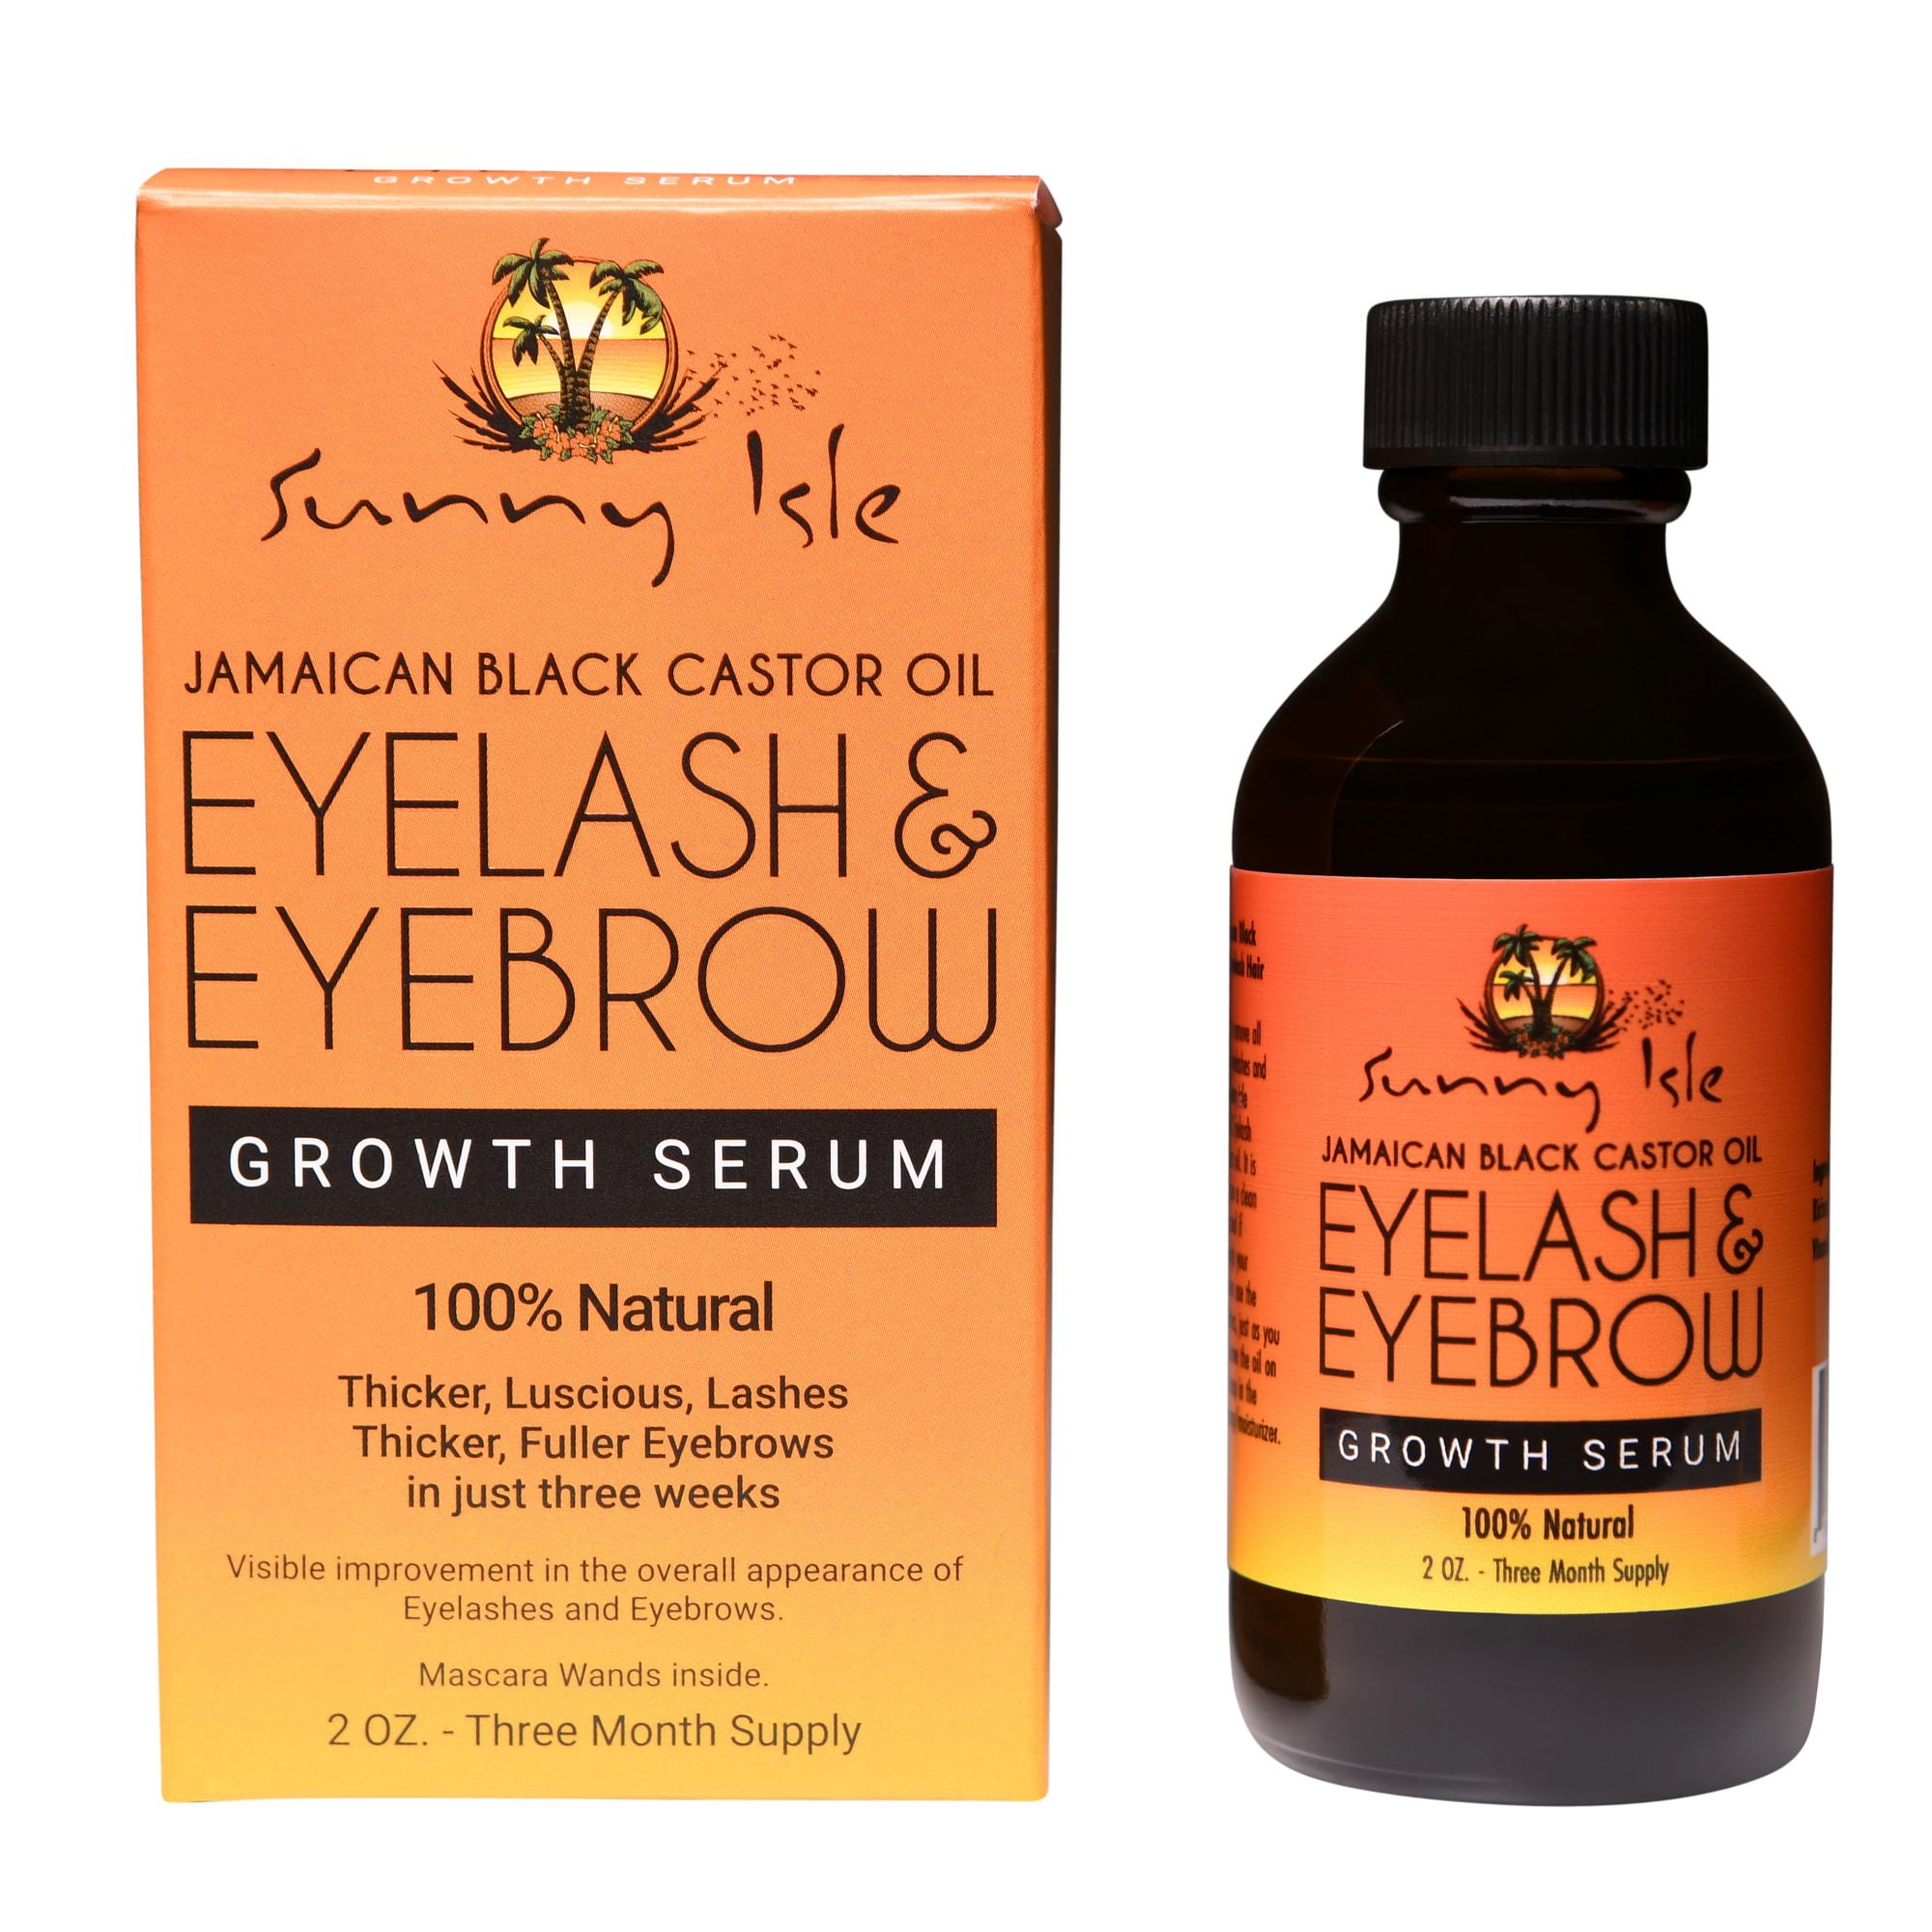 Sunny Isle Jamaican Black Castor Oil Eyelash And Eyebrow Growth Serum